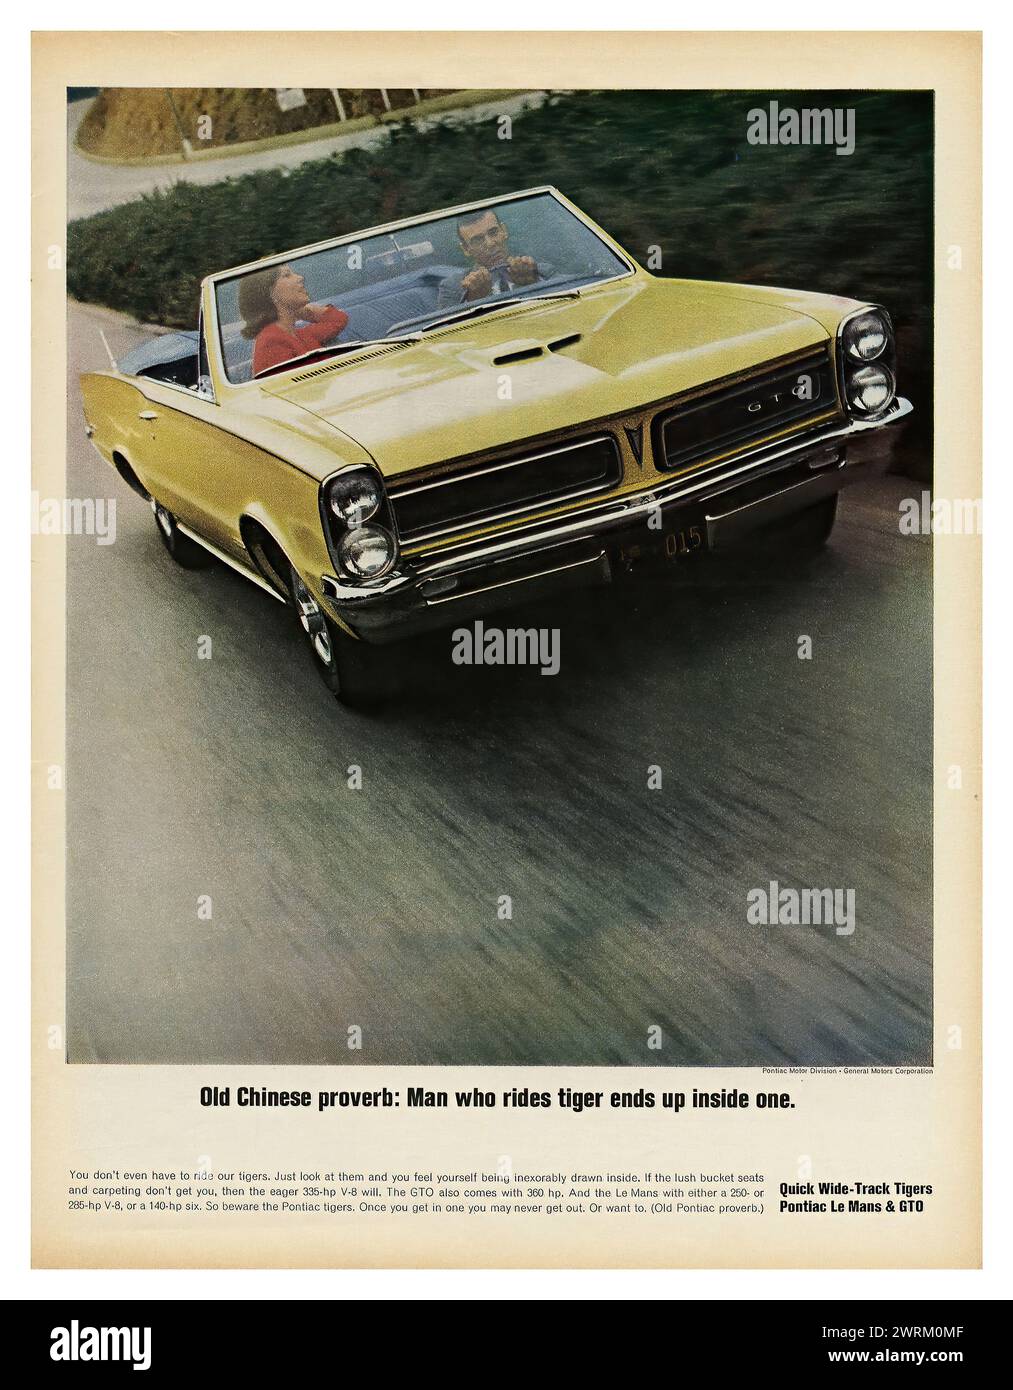 Pontiac Le Mans GTO (1965)  - Vintage American magazine car advert Stock Photo